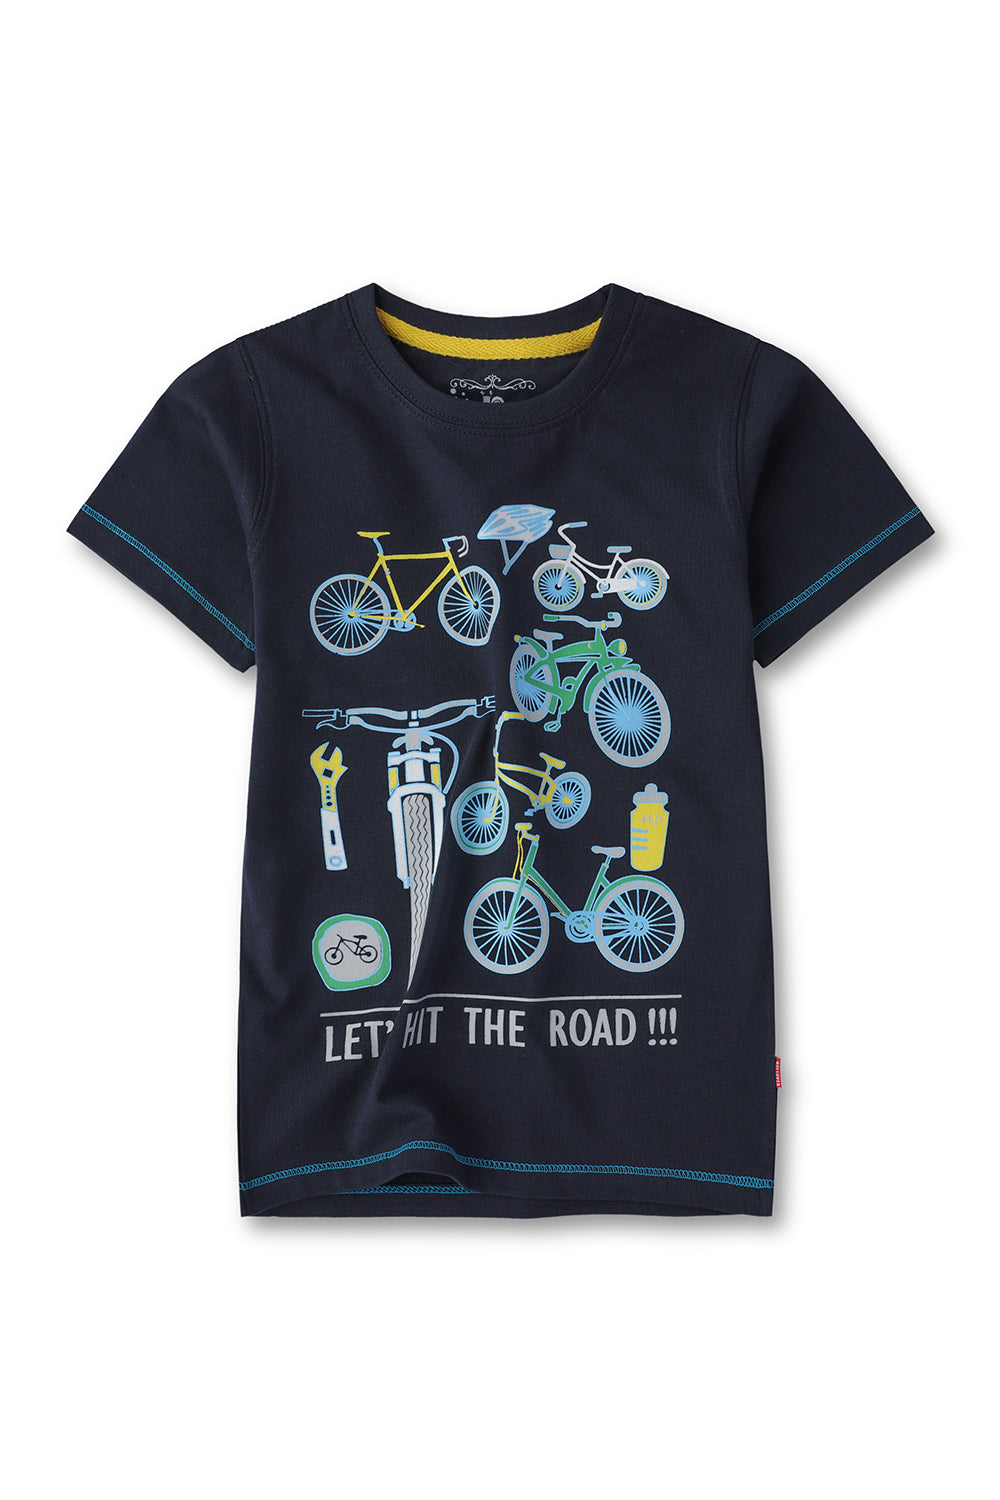 Boys Cycling Graphics Navy Blue Tshirt